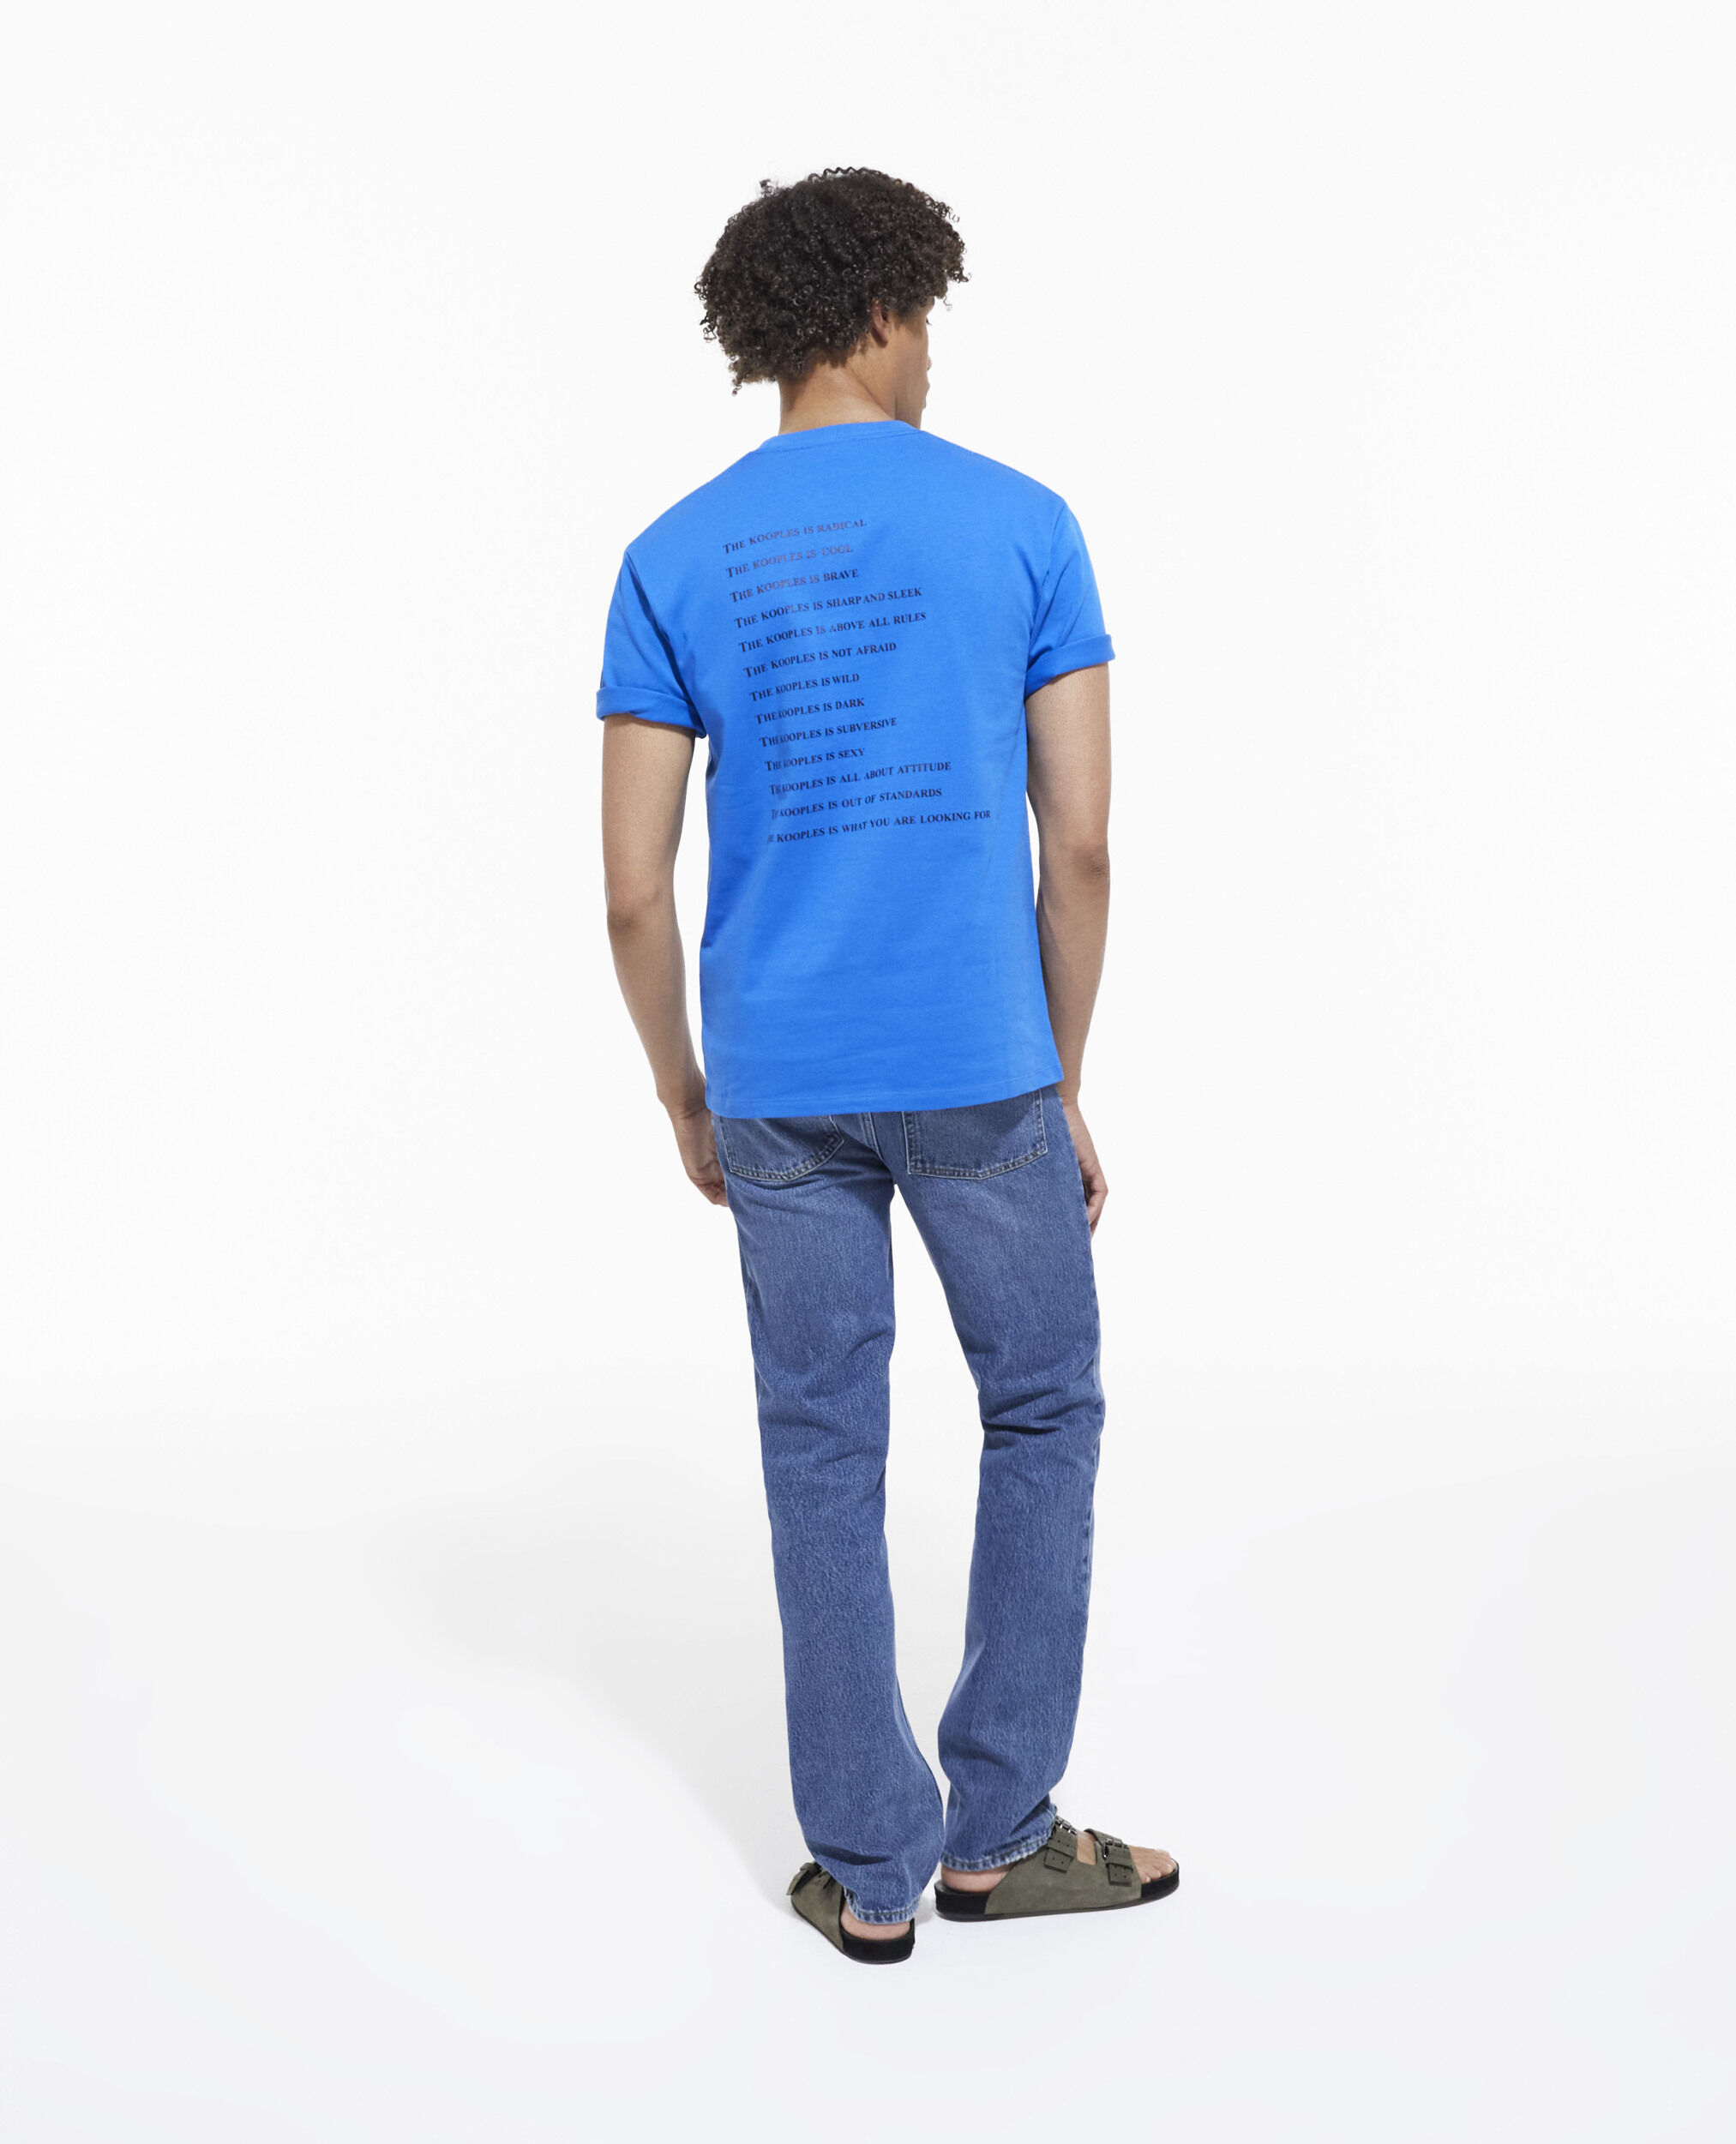 NEWCO T-shirt MODA UOMO Camicie & T-shirt Casual Blu navy/Bianco L sconto 78% 